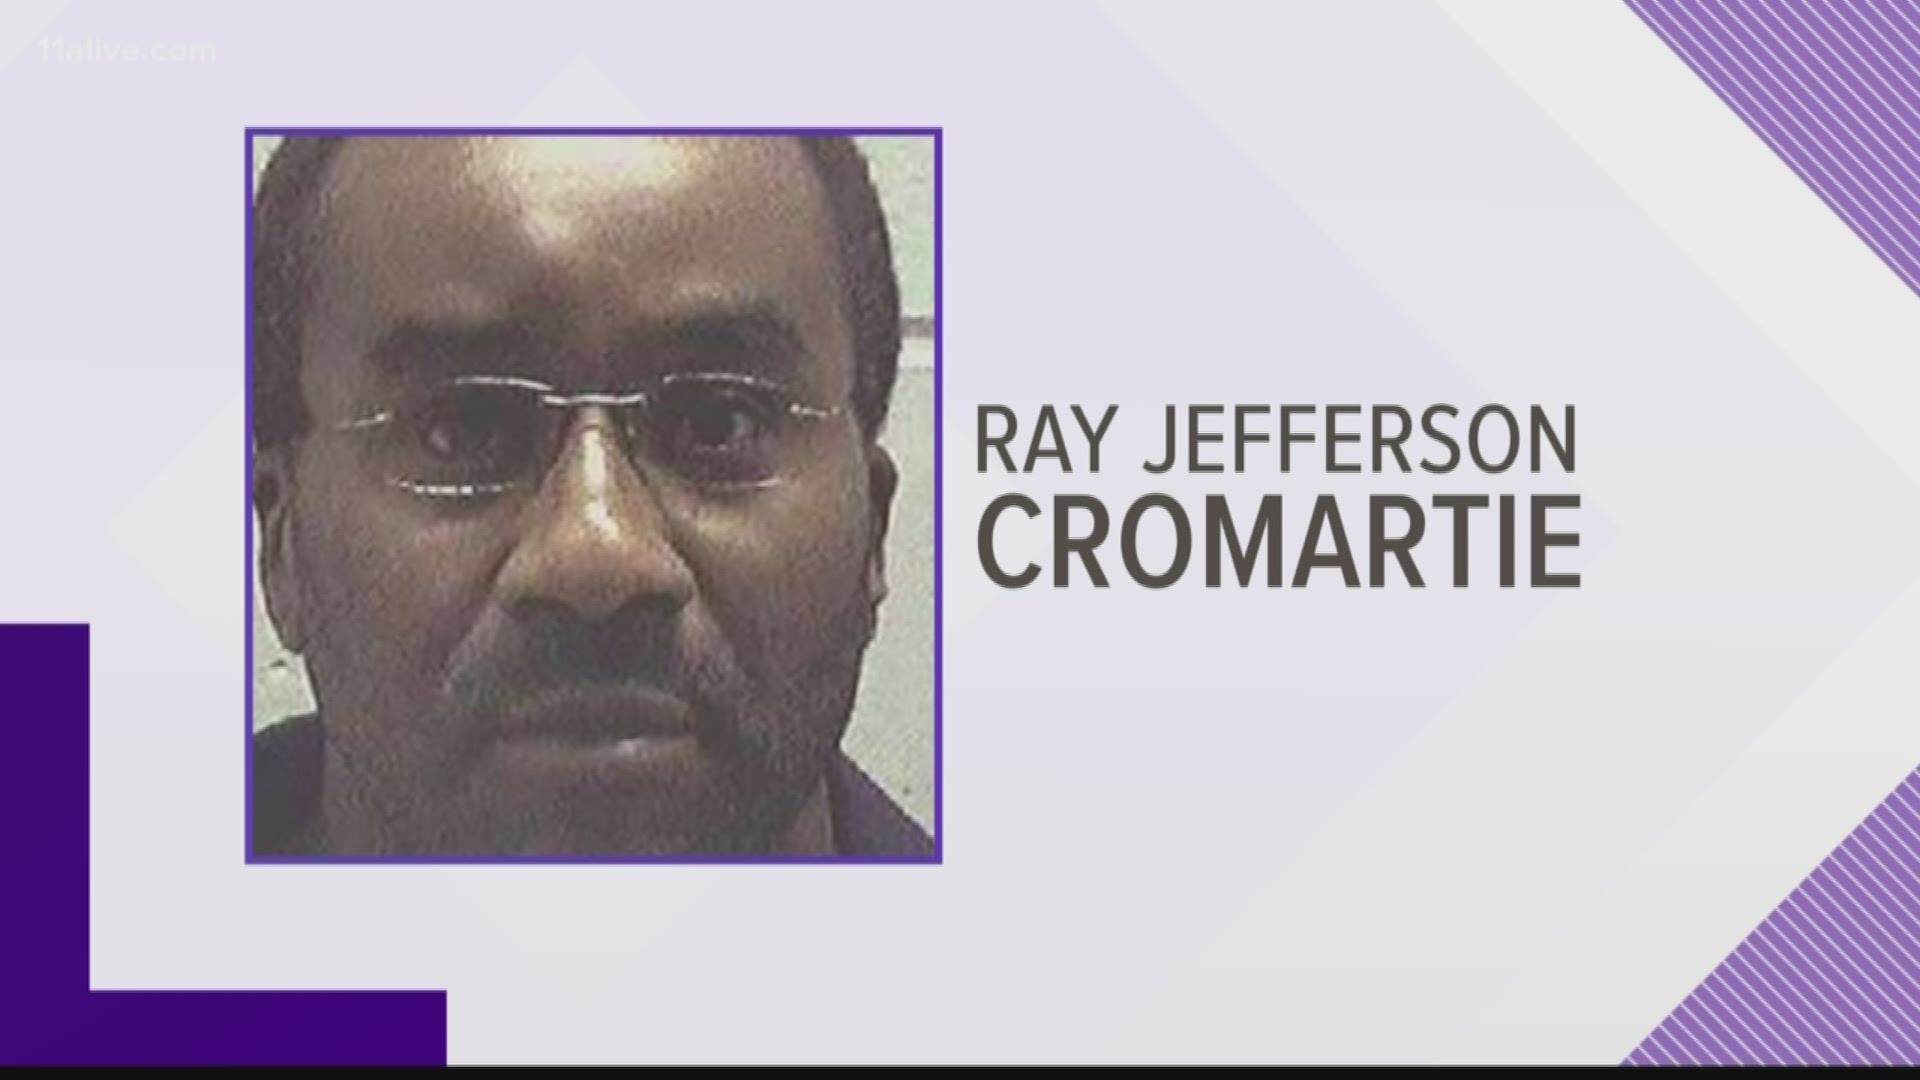 Ray Jefferson Cromartie is scheduled to die Wednesday.